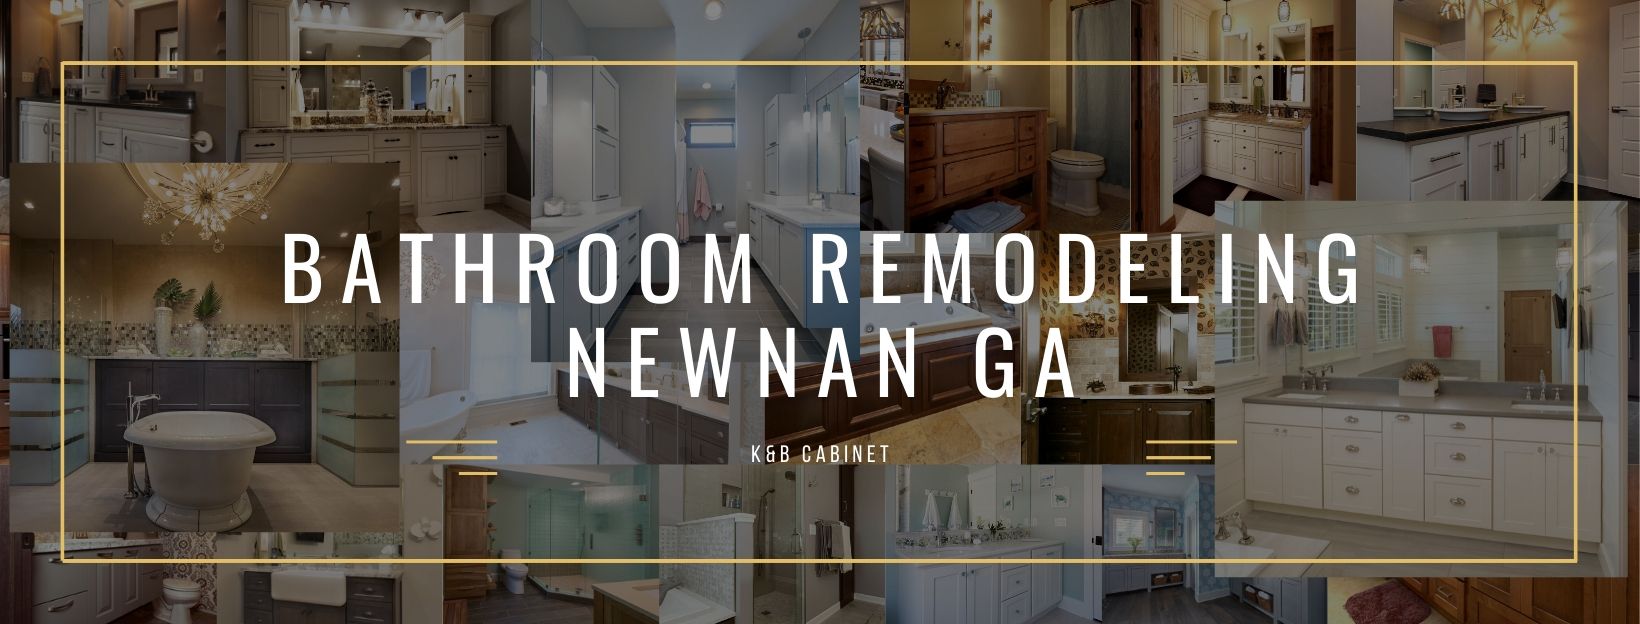 Bathroom Remodeling Newnan GA